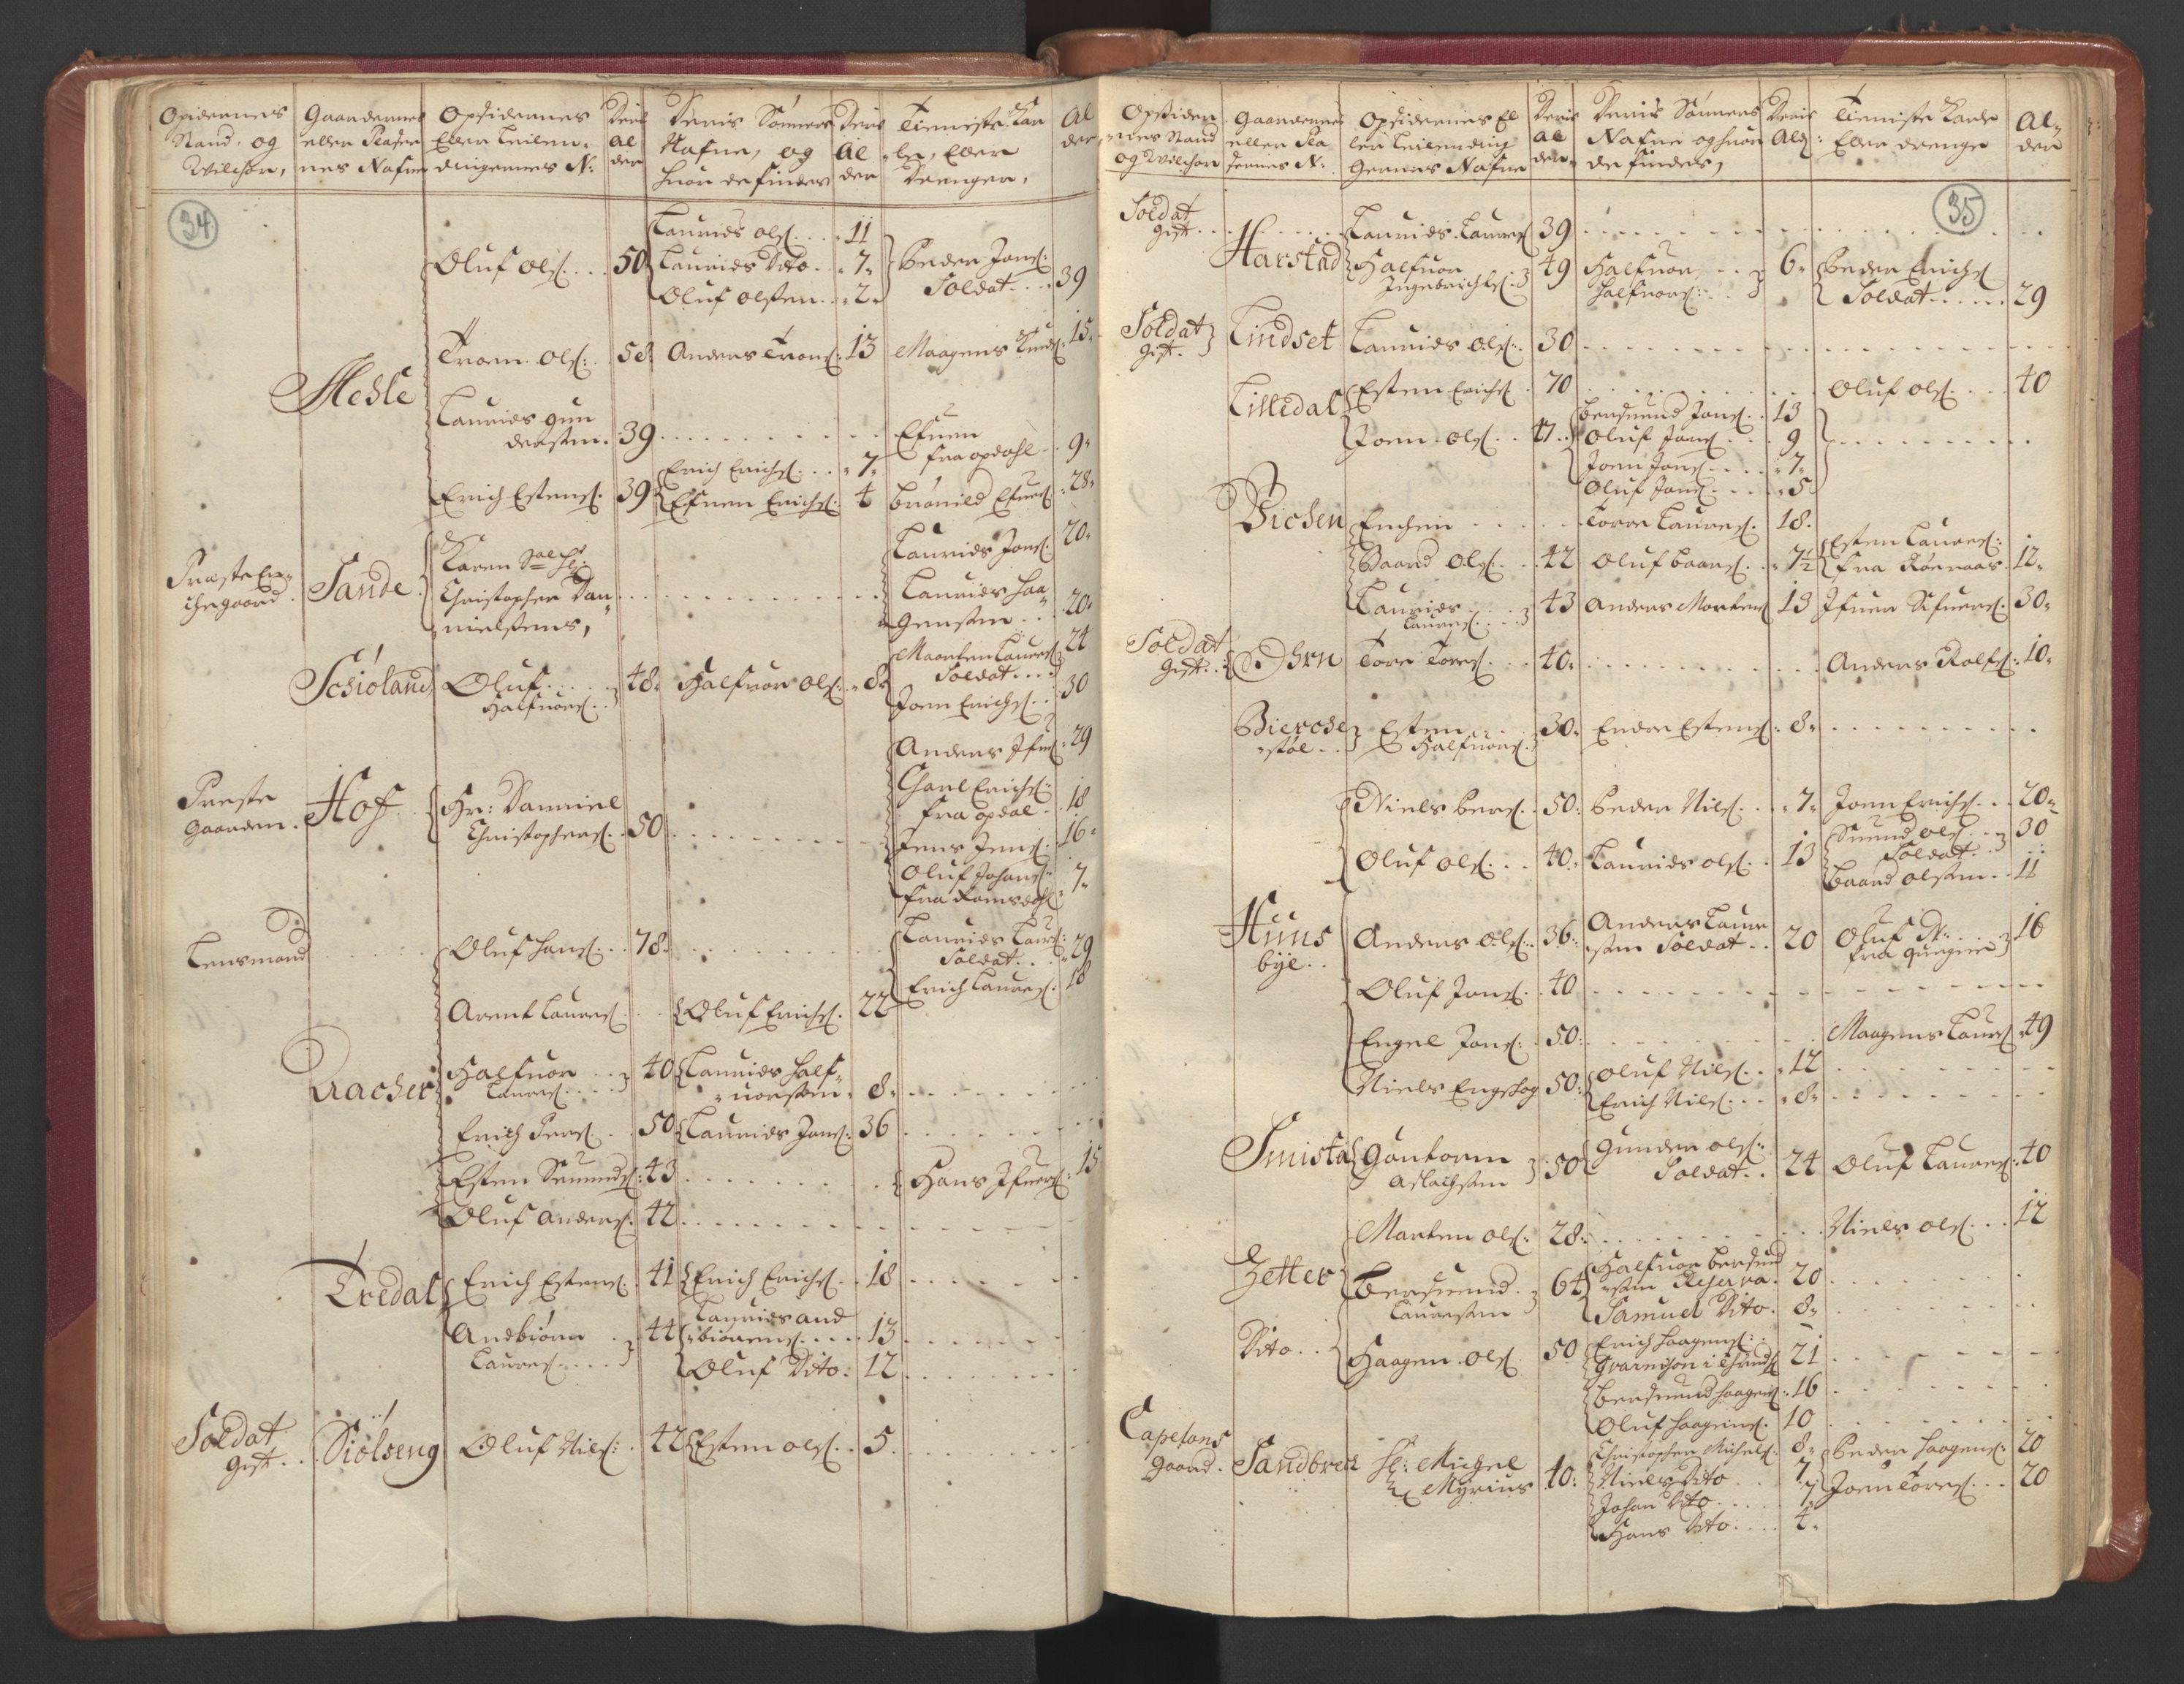 RA, Manntallet 1701, nr. 11: Nordmøre fogderi og Romsdal fogderi, 1701, s. 34-35